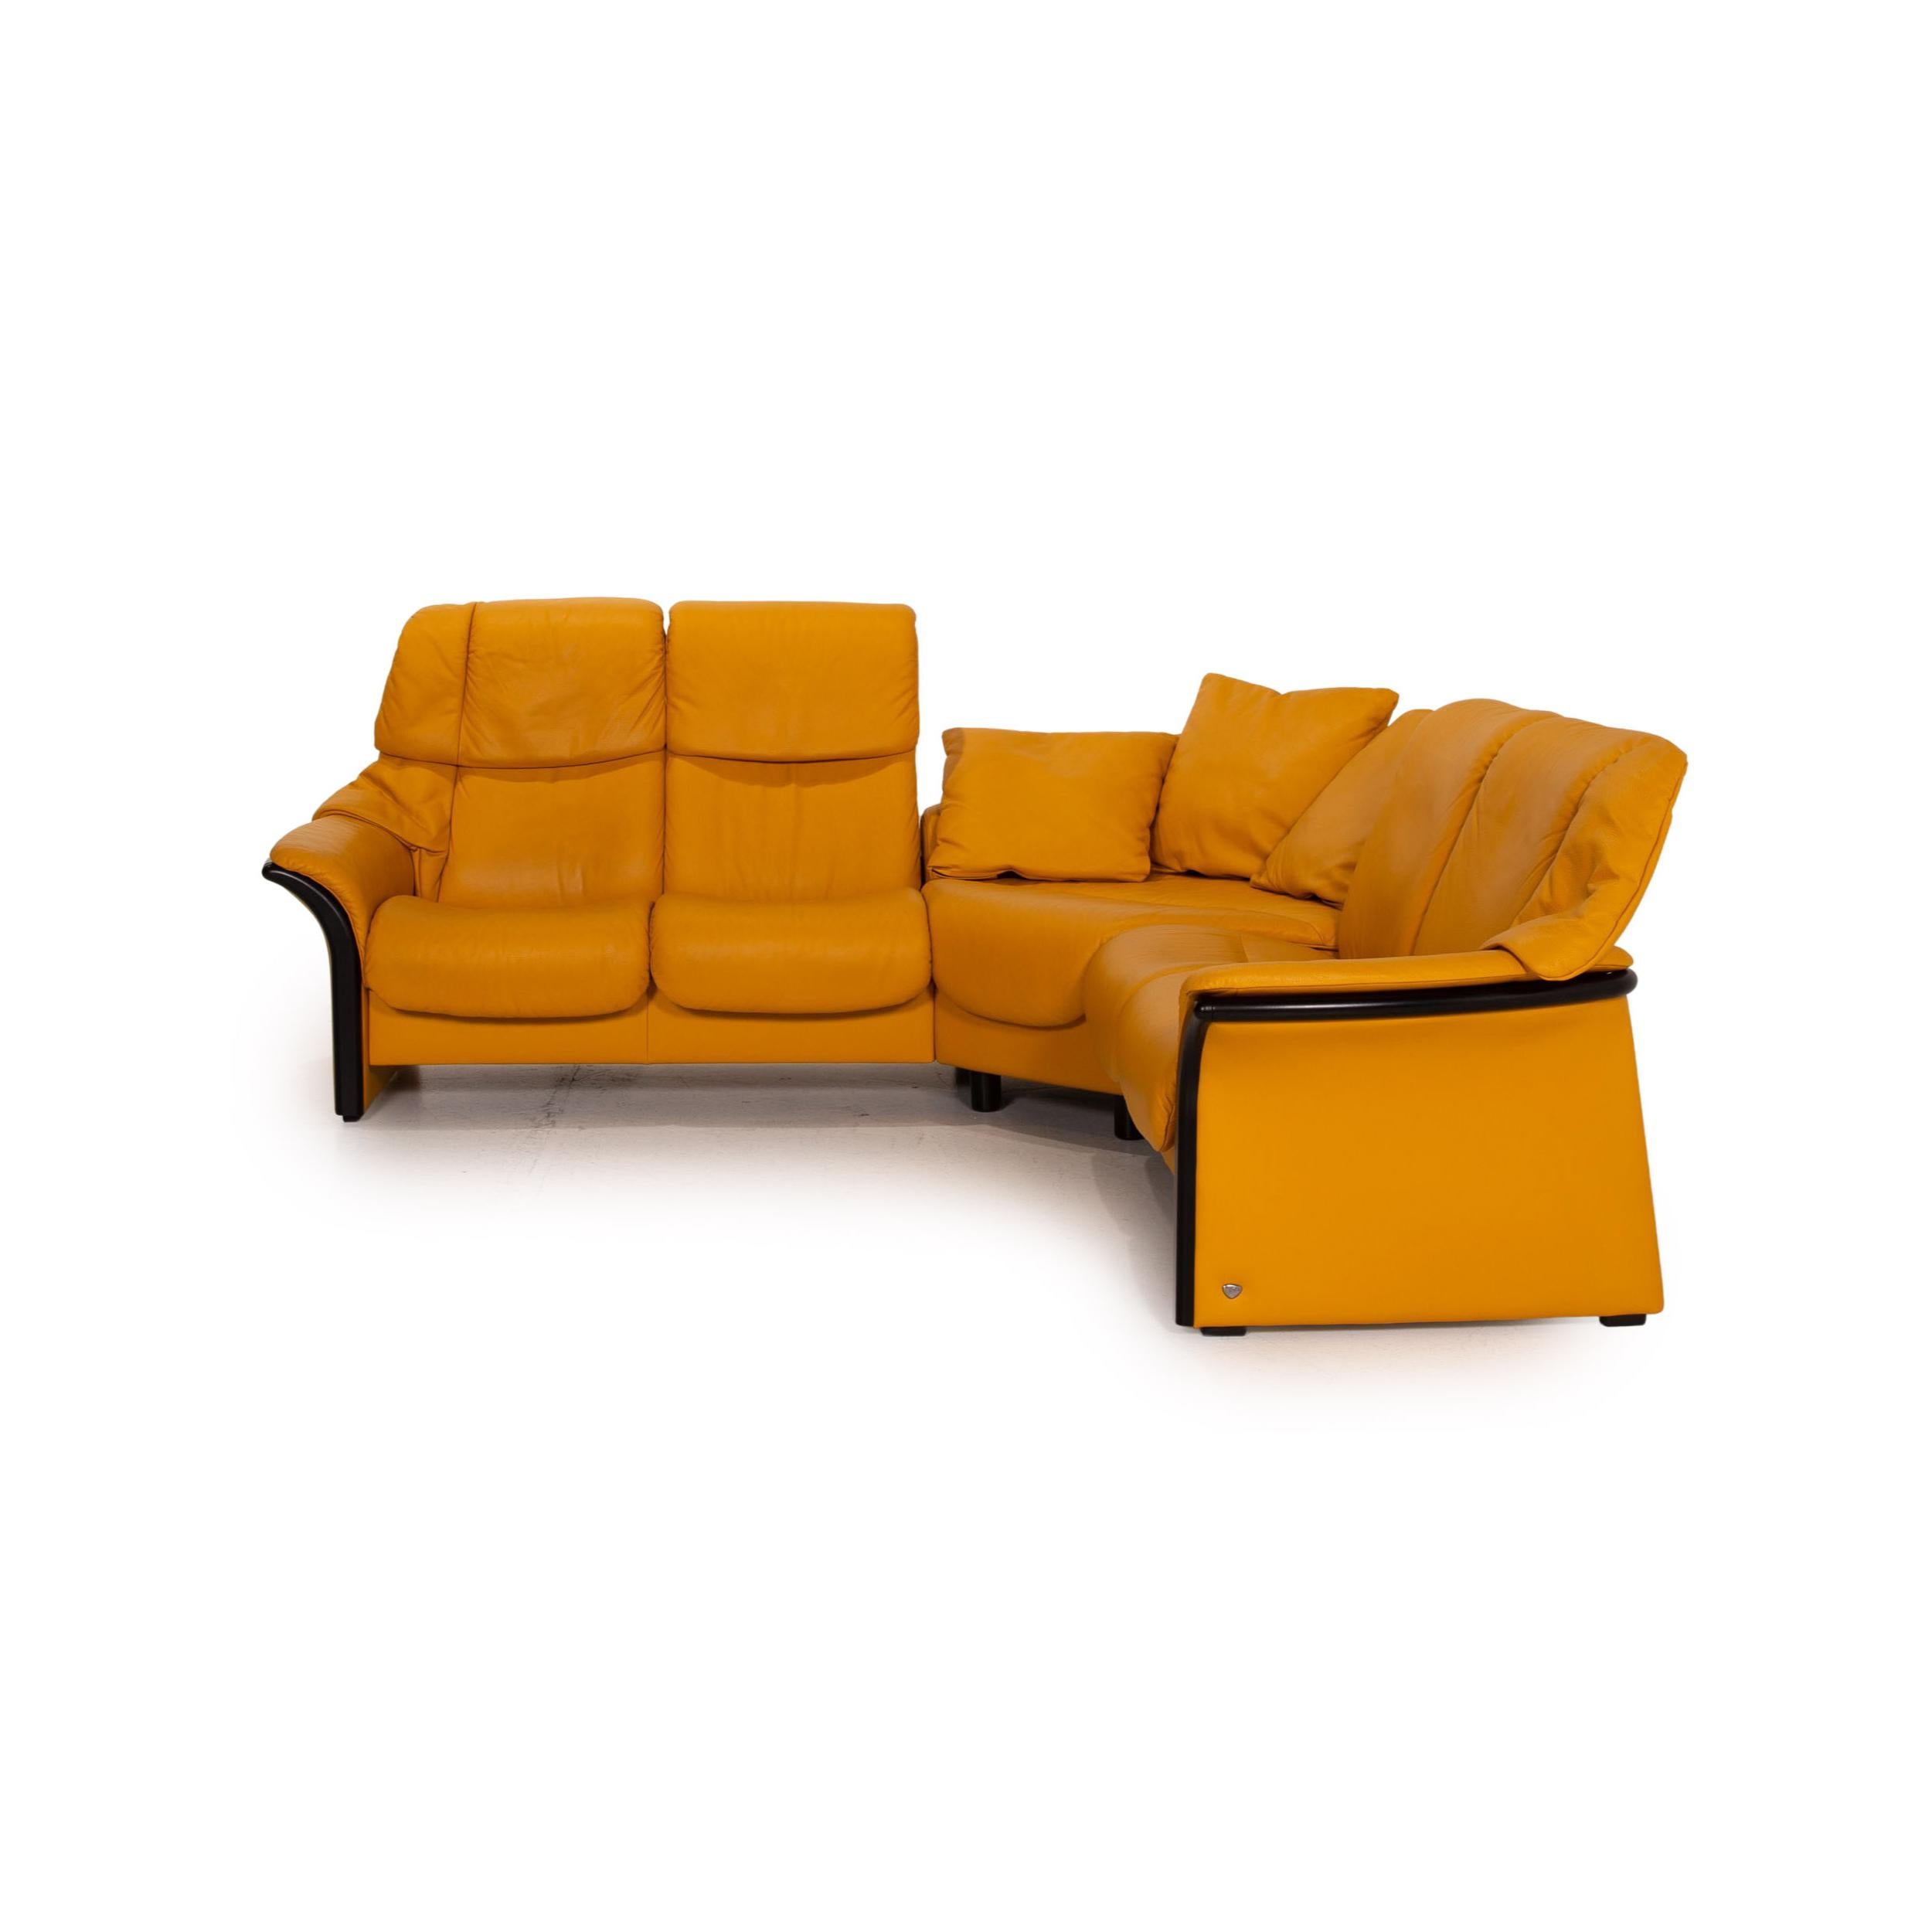 Stressless Eldorado Leather Corner Sofa Yellow Relax Function Sofa Couch 4